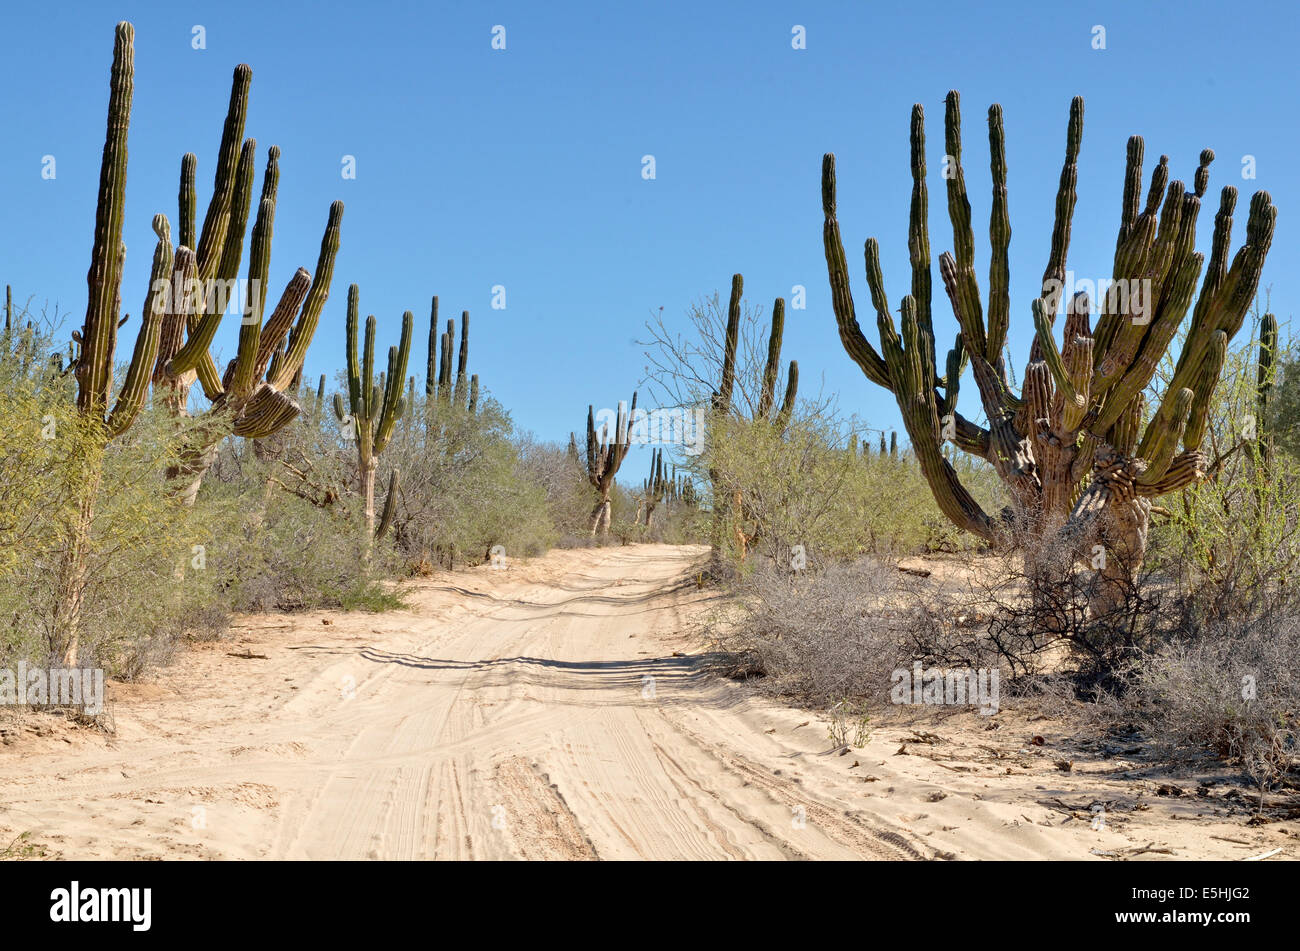 Sandy road with Cardon cactus (Pachycereus pringlei) cactus desert at La Ventana, Baja California Sur, Mexico Stock Photo